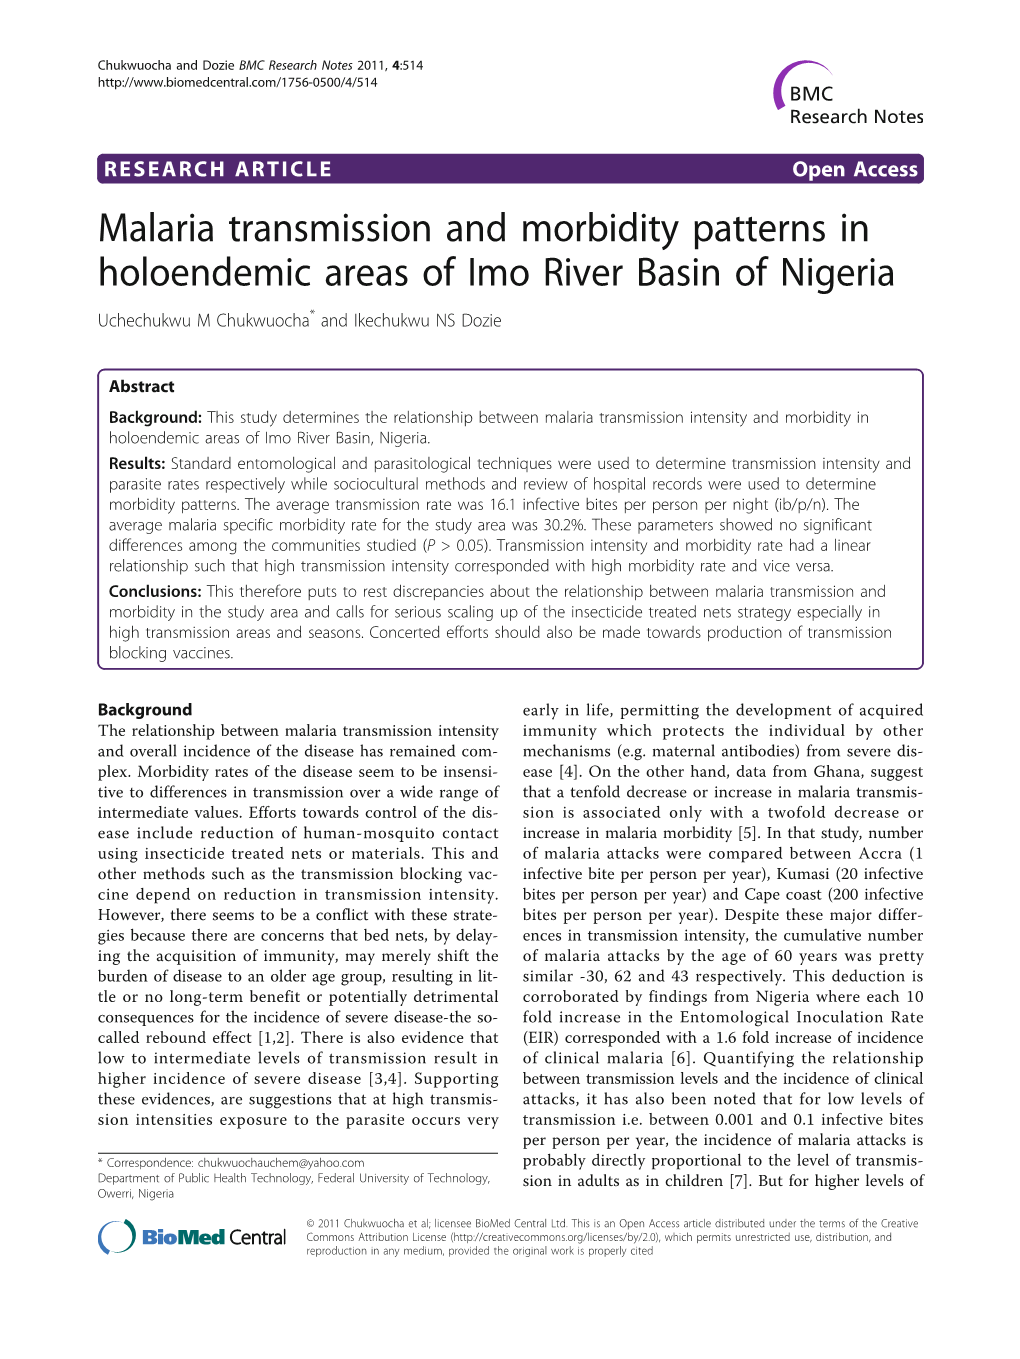 Malaria Transmission and Morbidity Patterns in Holoendemic Areas of Imo River Basin of Nigeria Uchechukwu M Chukwuocha* and Ikechukwu NS Dozie